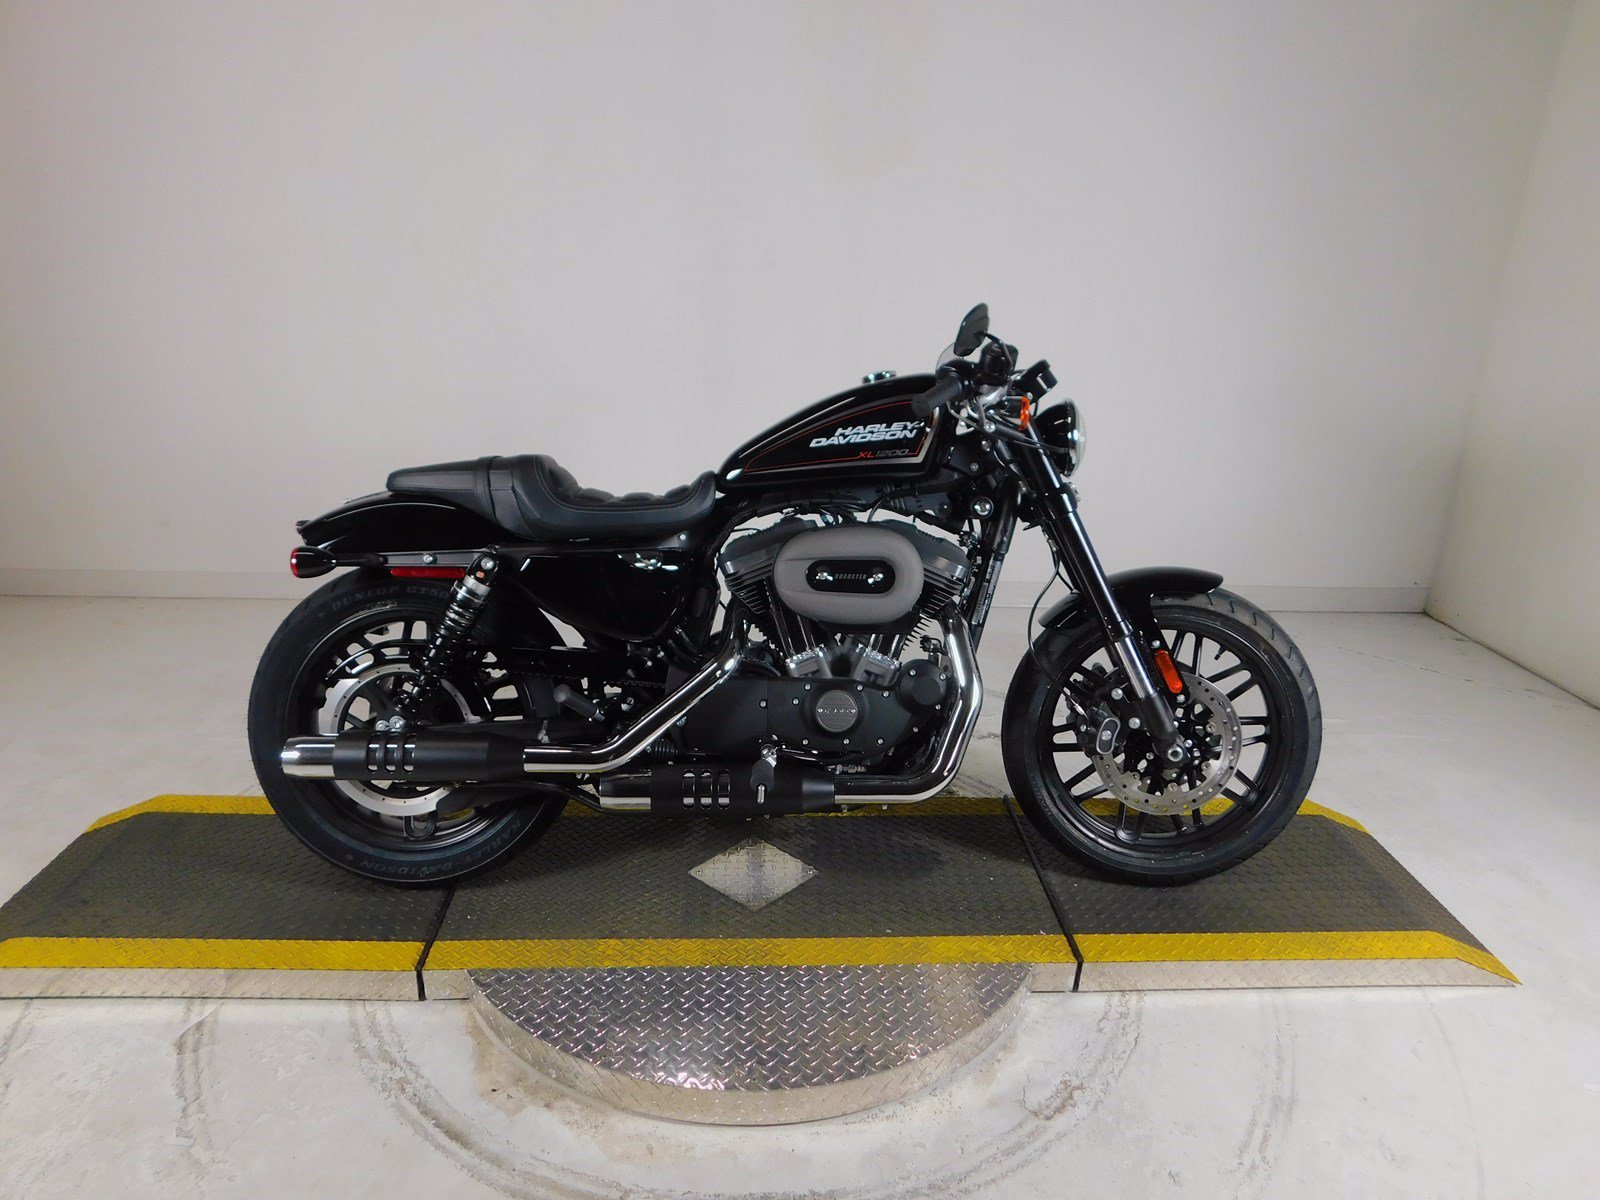 New 2019 Harley Davidson Sportster Roadster XL1200CX 